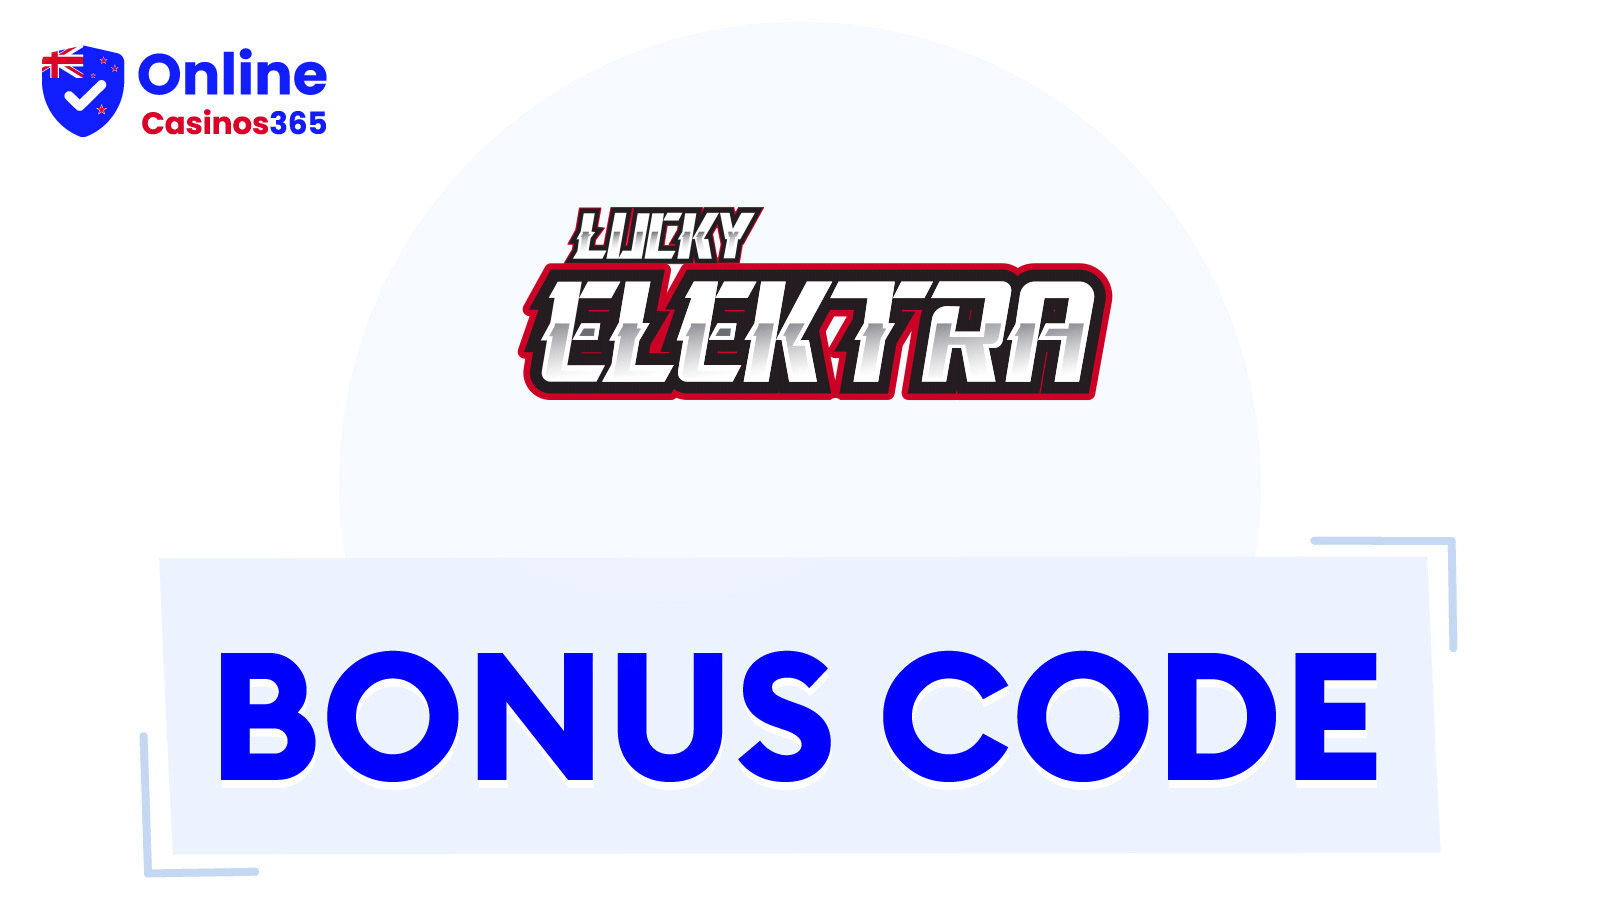 Lucky Elektra Casino Bonuses